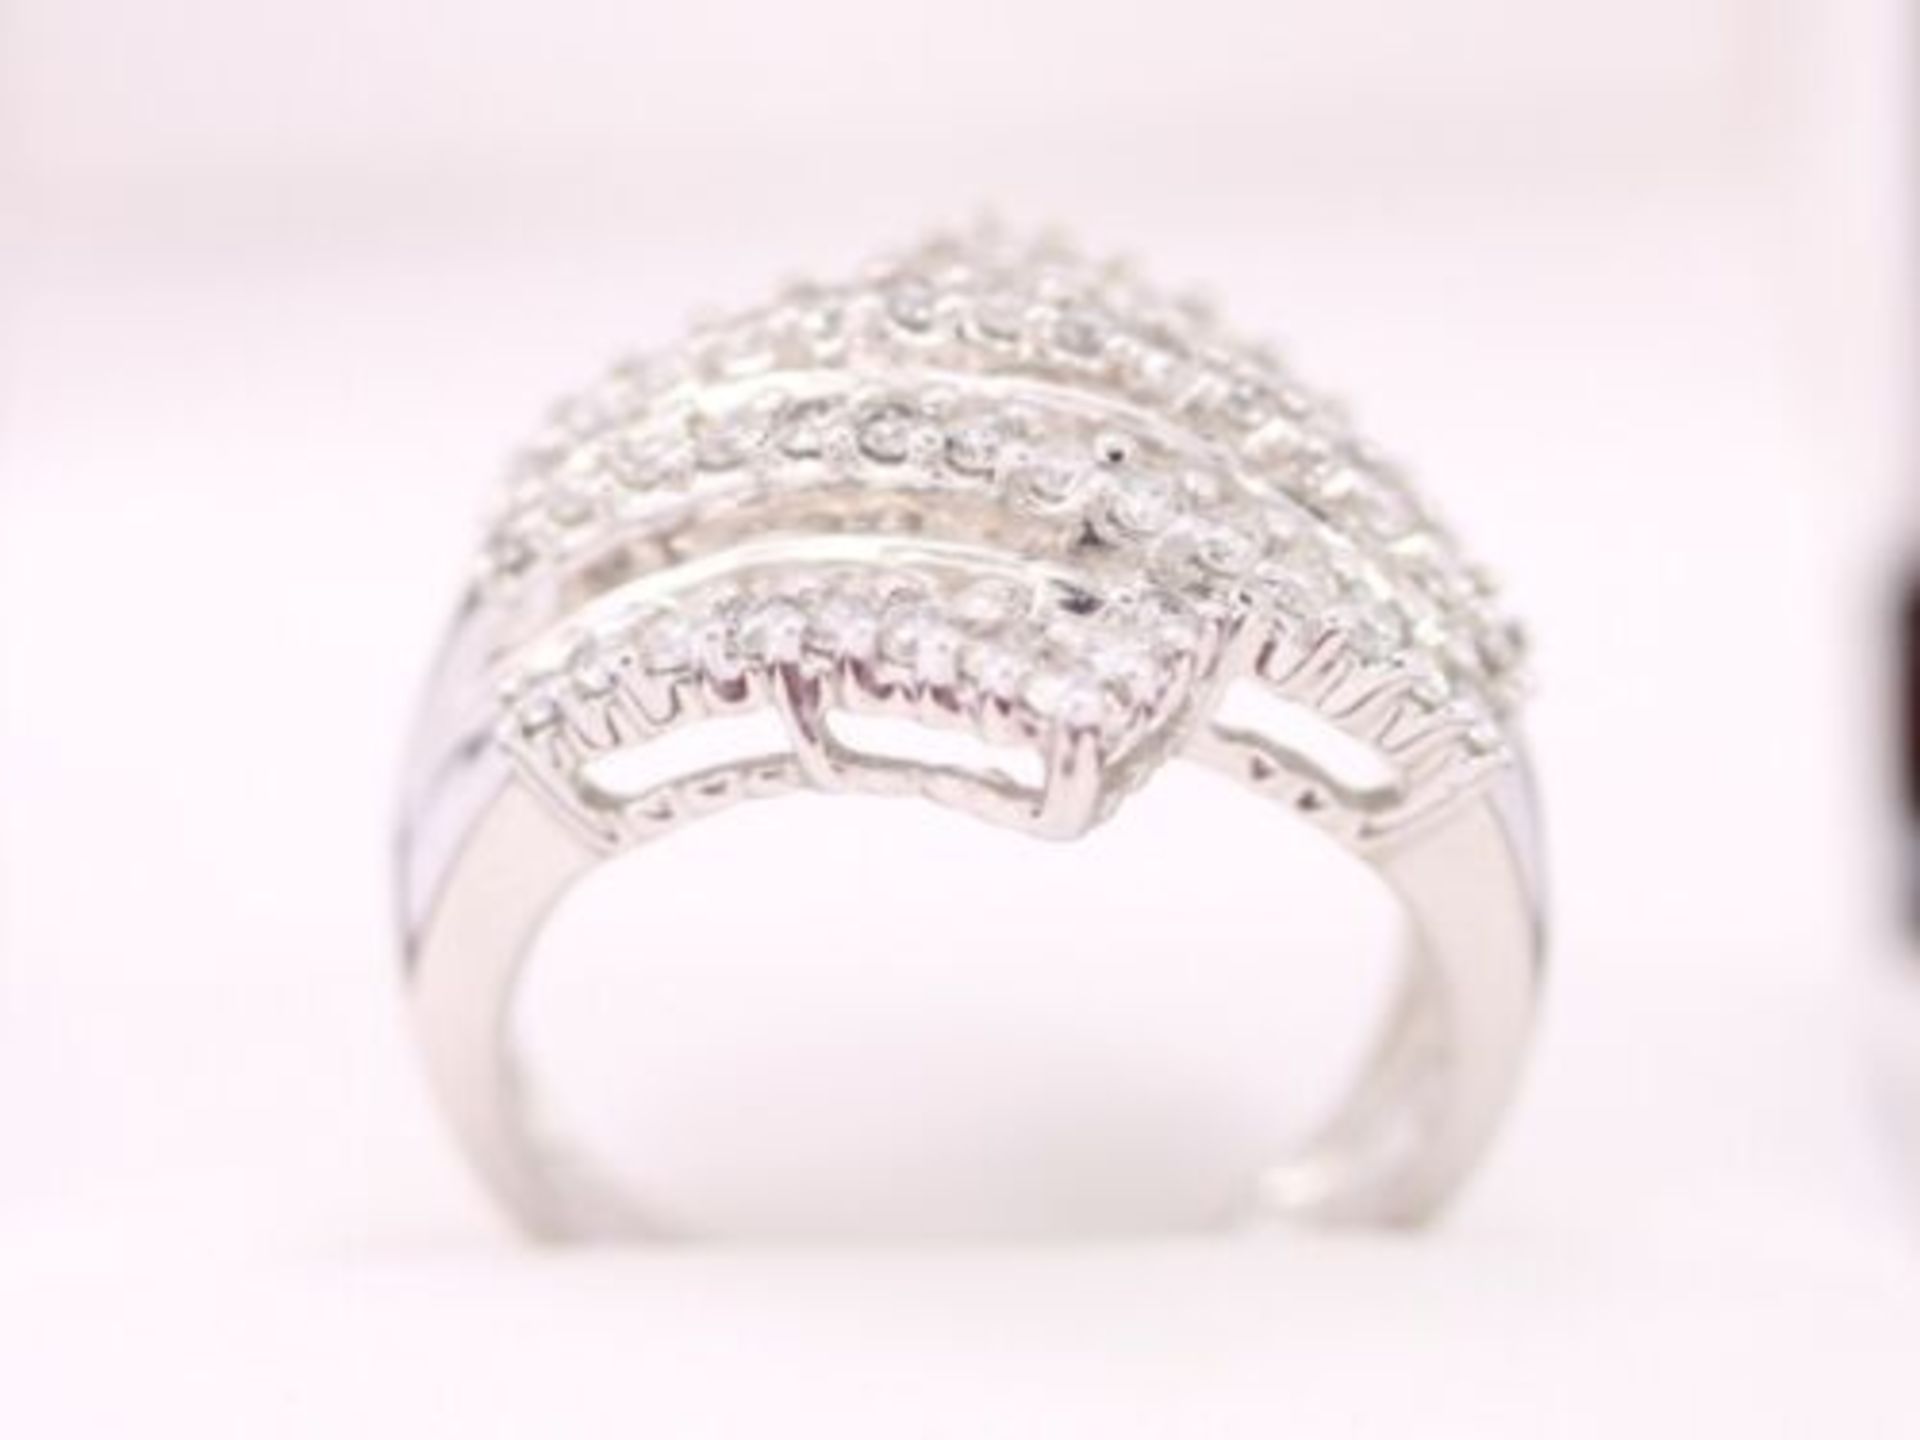 DIAMOND RING BEAUTIFUL 14CT WHITE GOLD RETRO STUNNING LADIES SIZE O 1/2 6.7G - Image 2 of 5